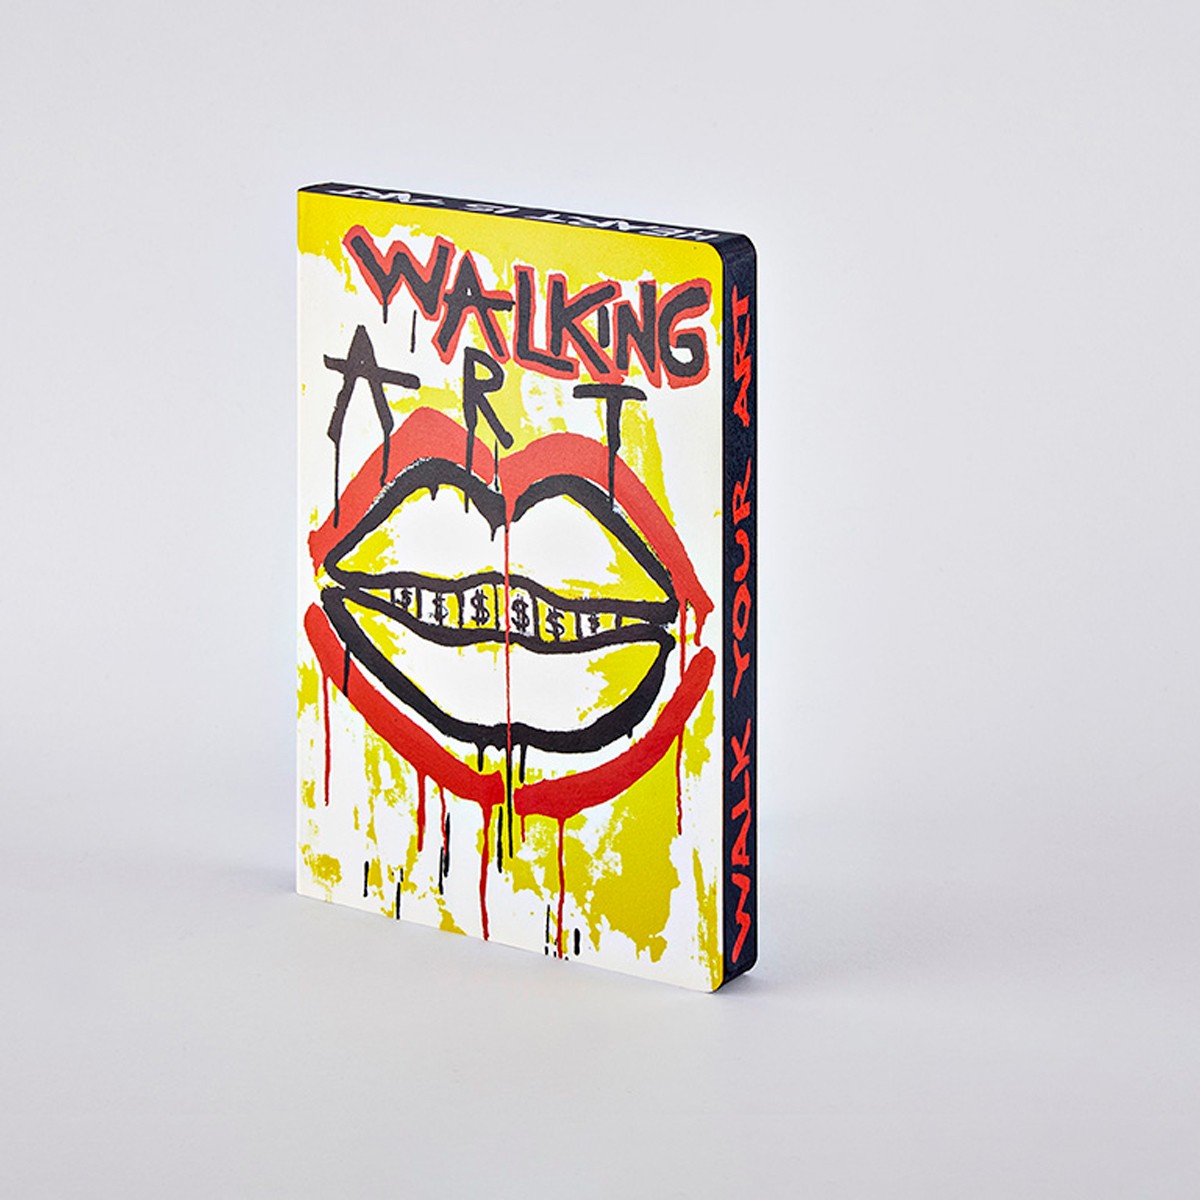 Nuuna Notebook Graphic L - WALKING ART by MARIJA MANDIC